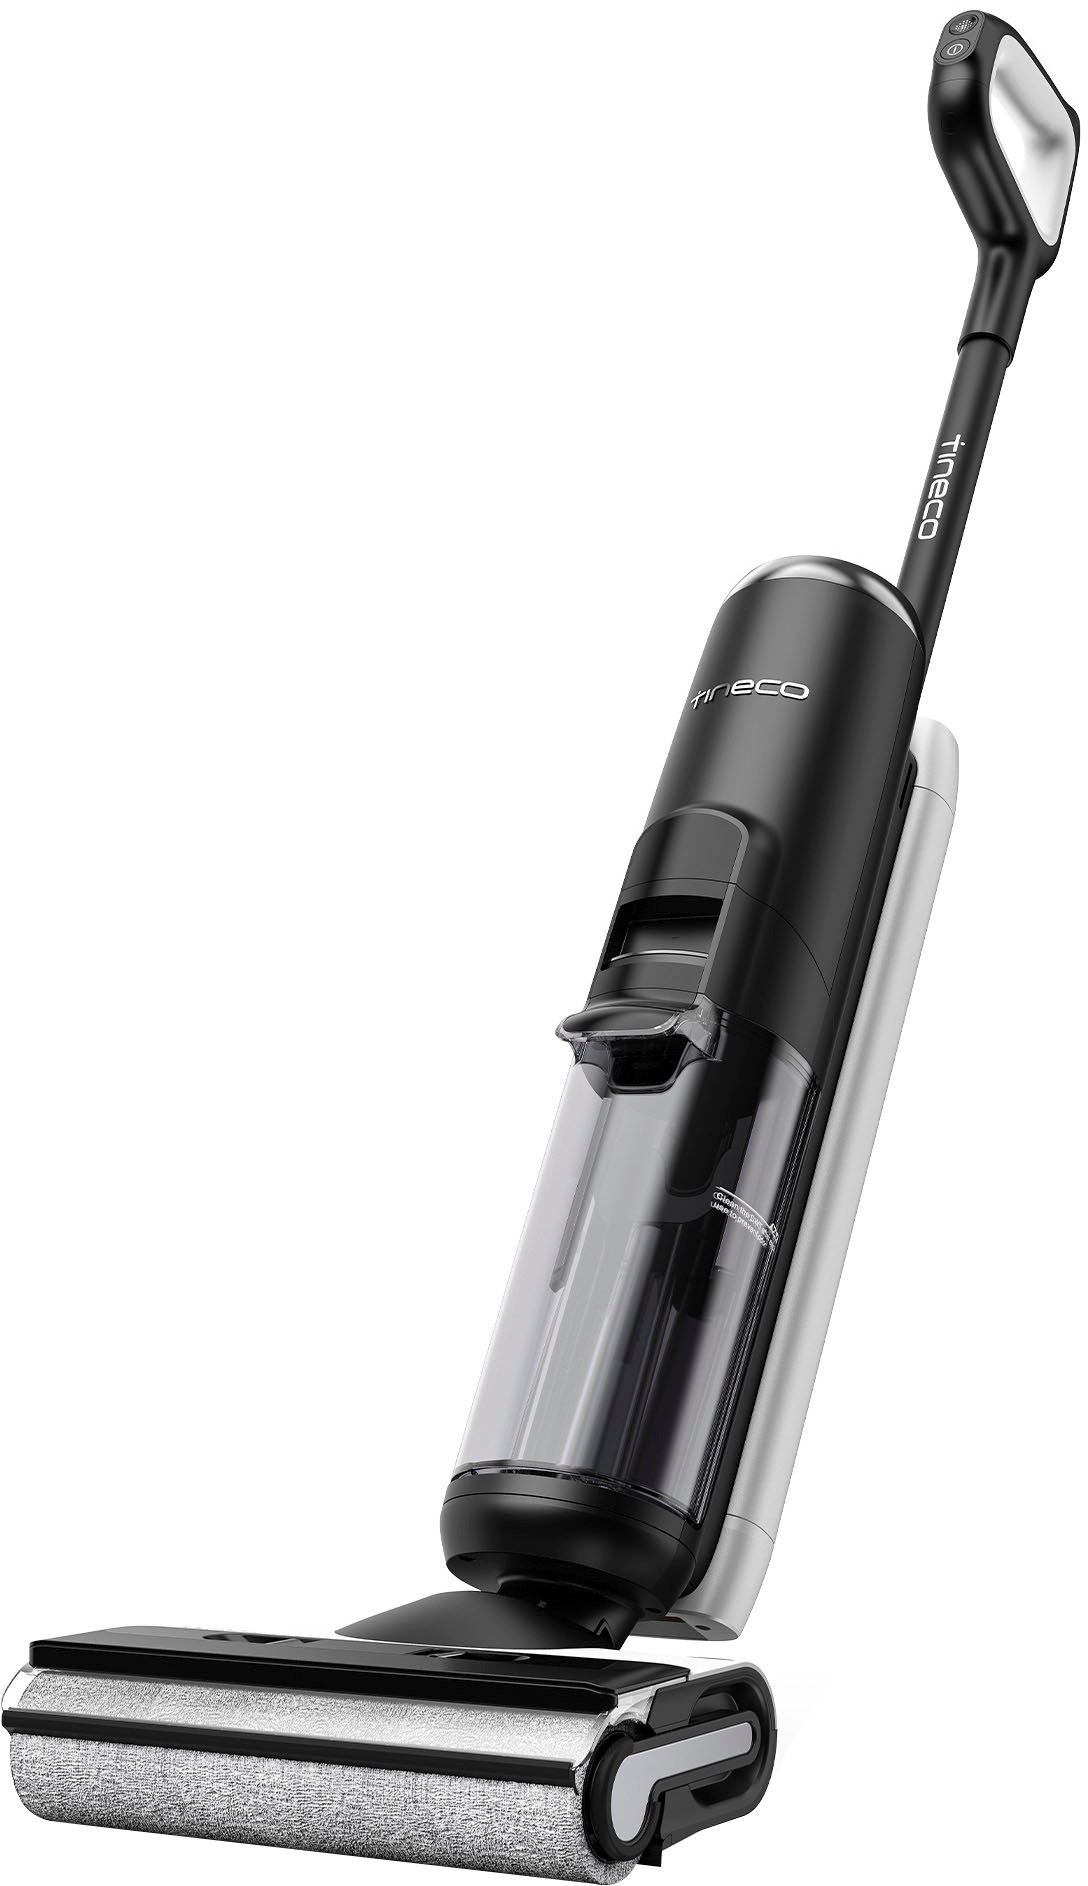 Tineco iFloor 3 Ultra Wet/ Dry Cordless Vacuum Cleaner White